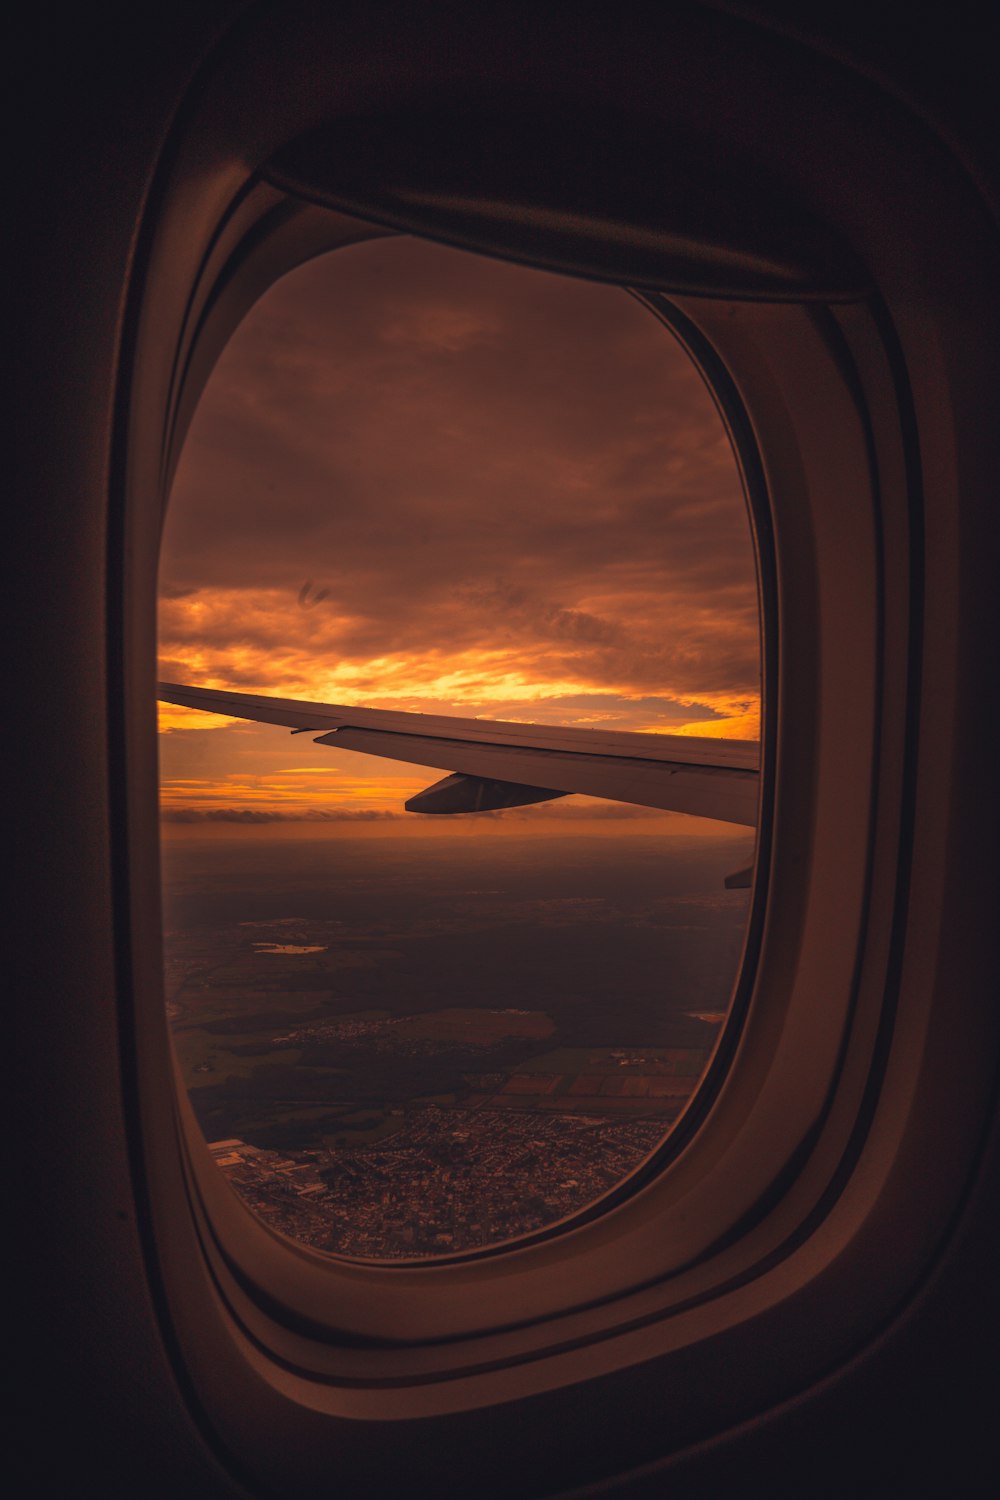 airliner wing under golden hour